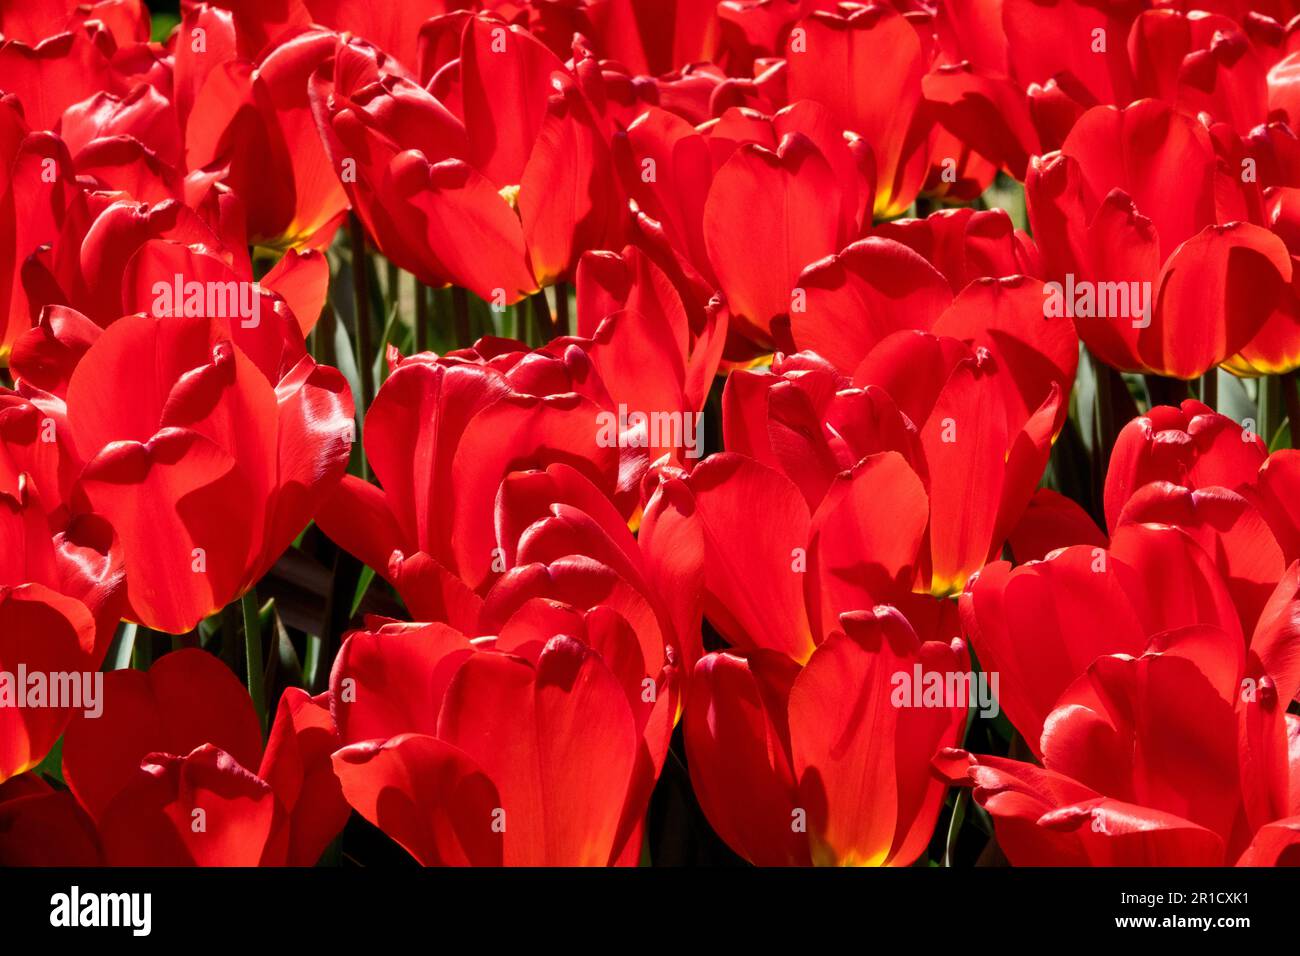 Garden Red Tulips 'Parade' Tulip Sunlit Stock Photo